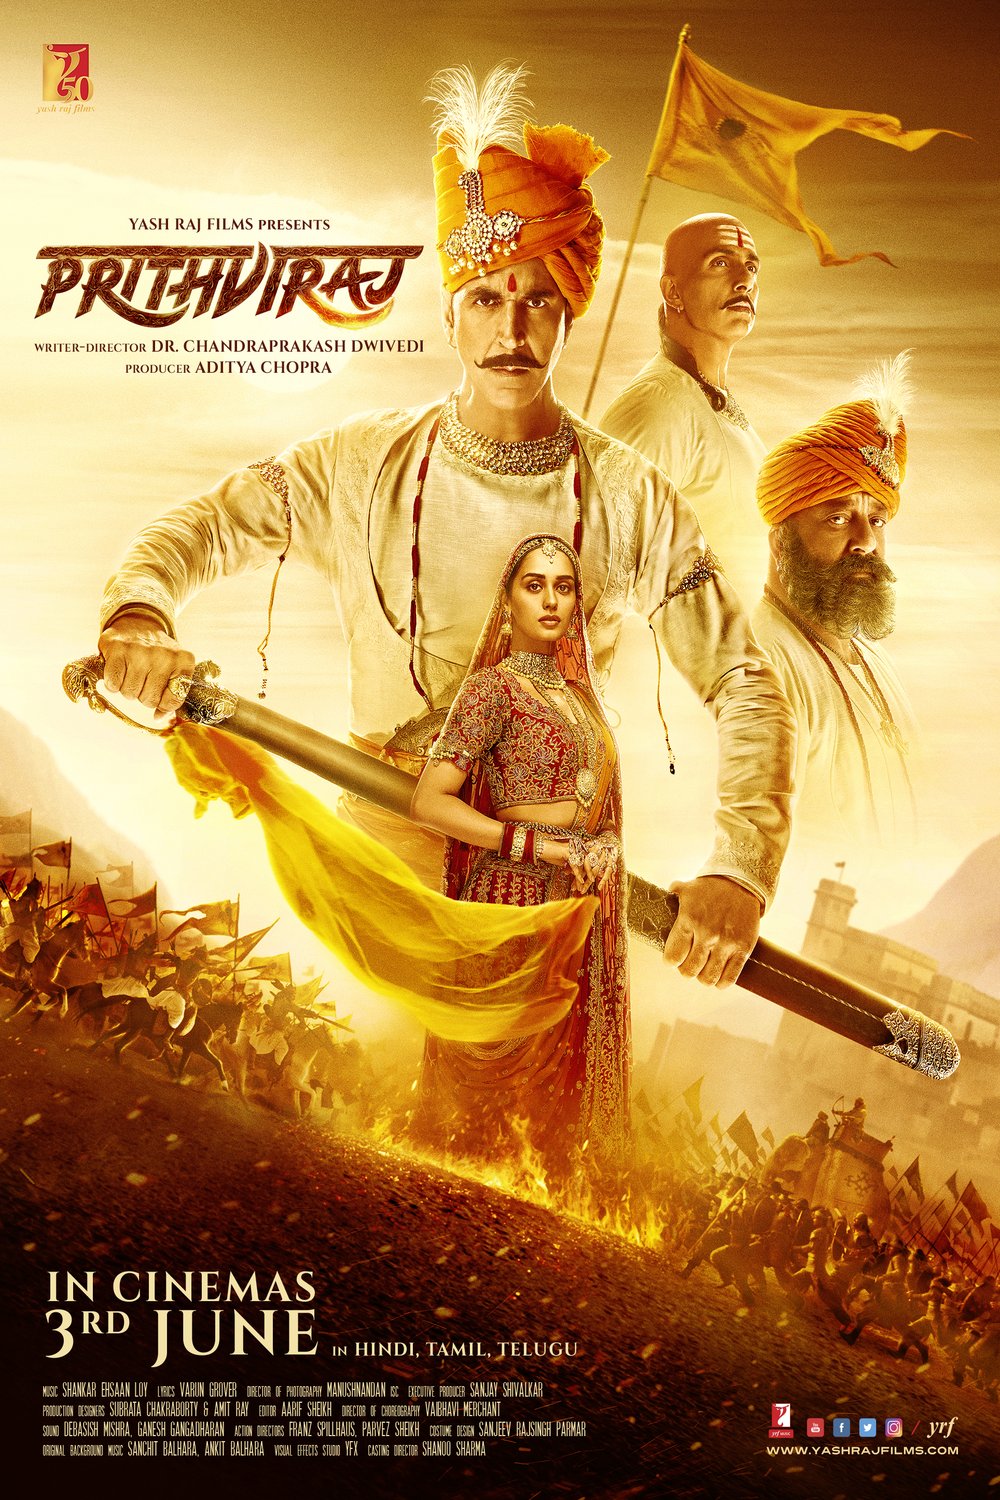 Hindi poster of the movie Prithviraj